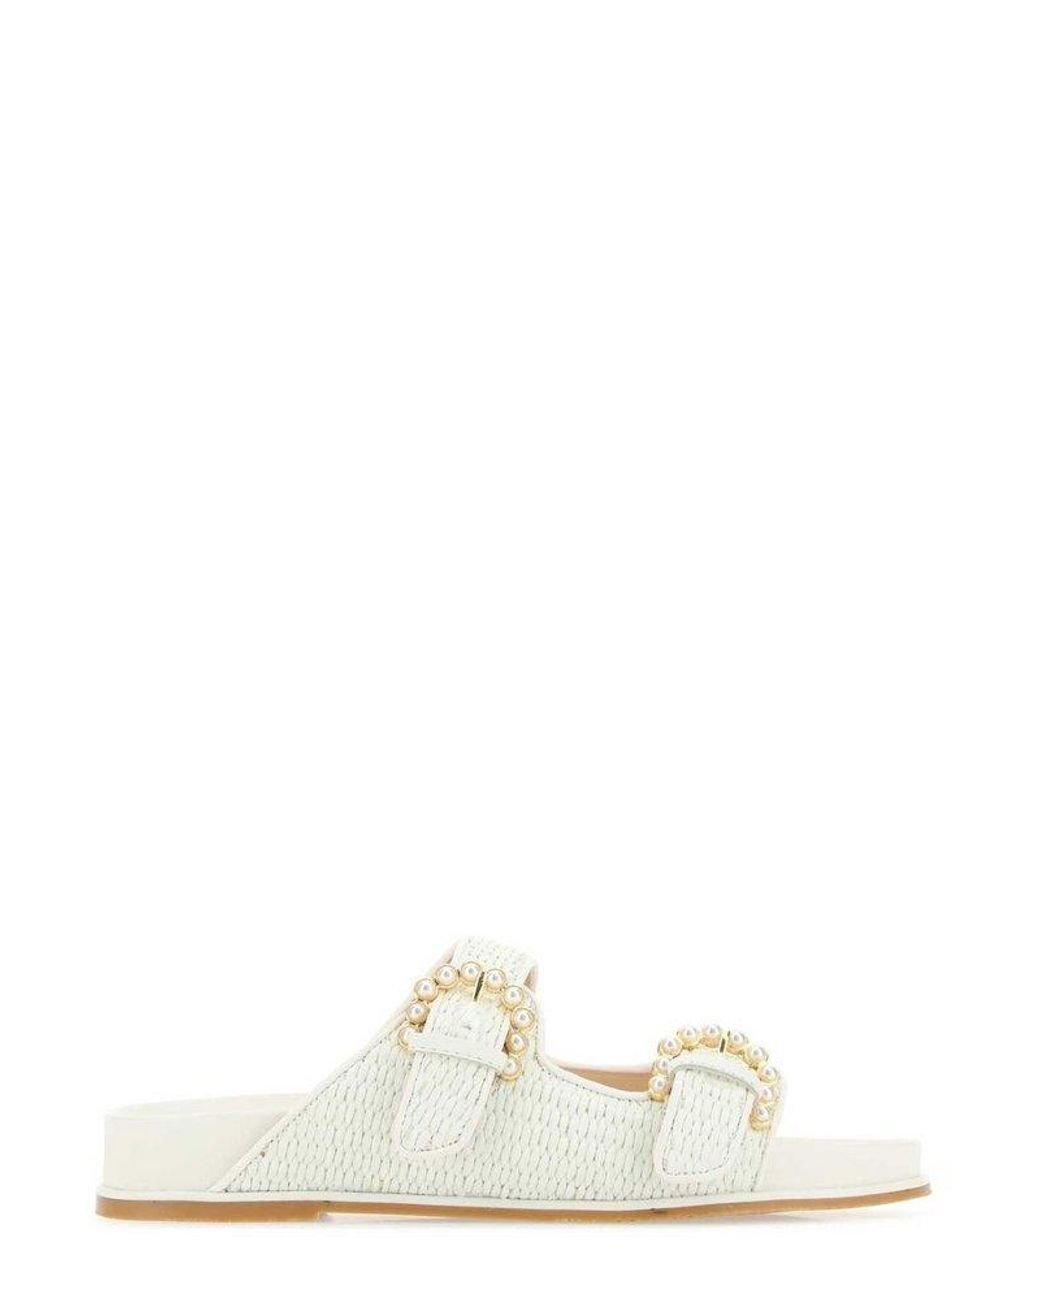 Stuart Weitzman Piper Slide Sandals in White | Lyst